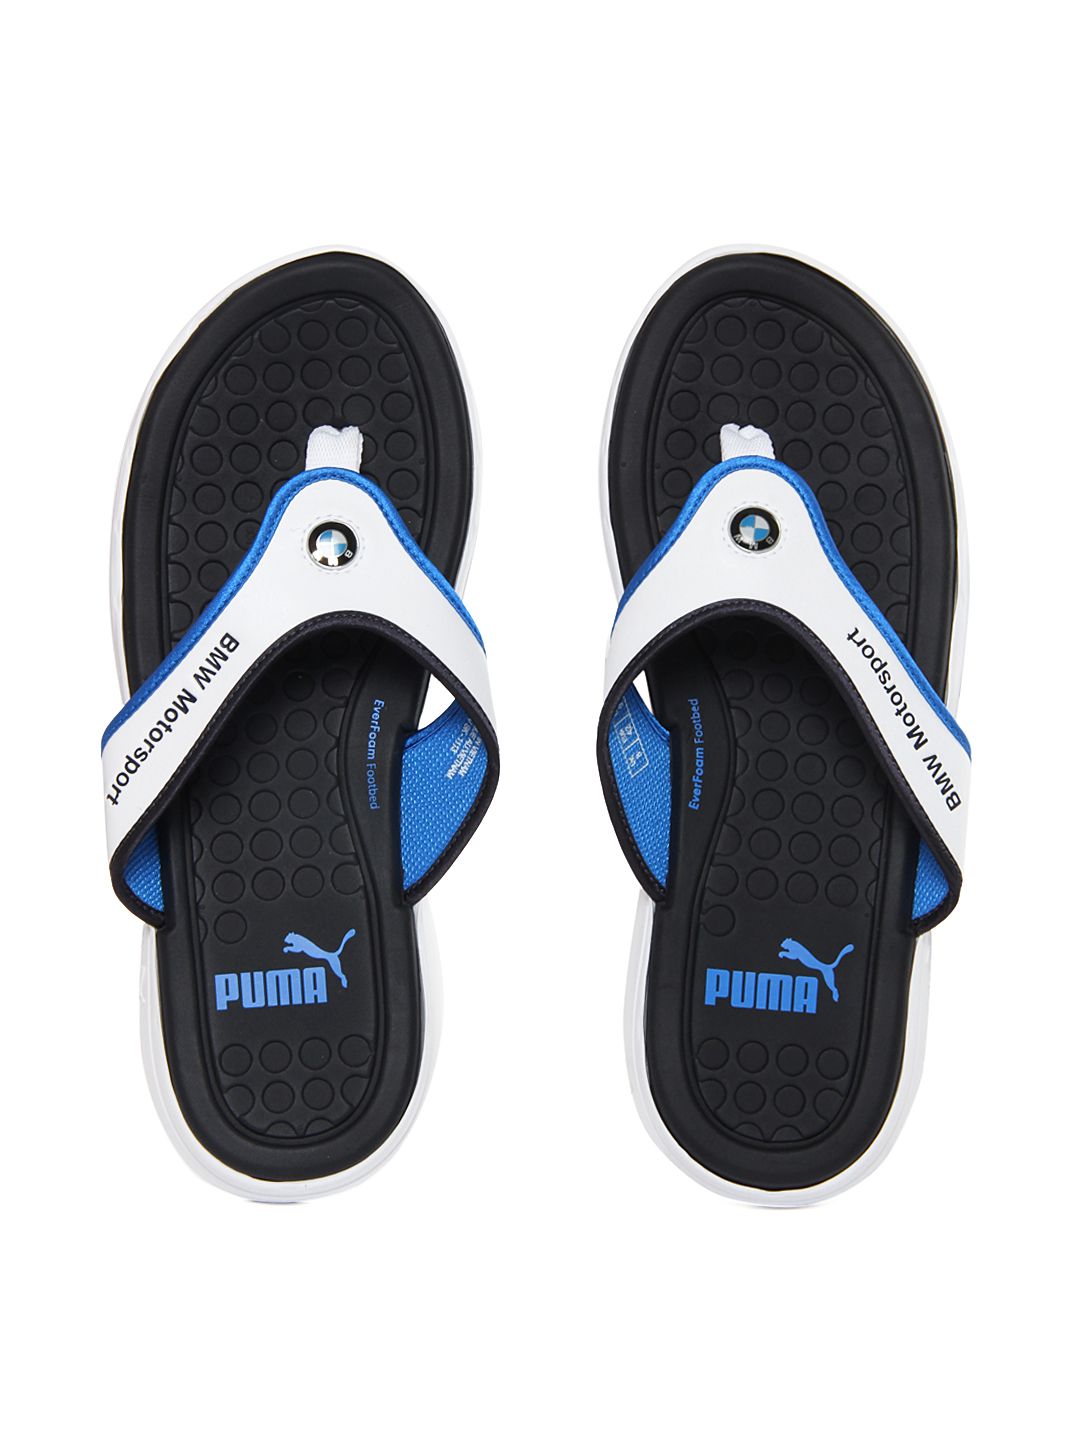 puma sandal online